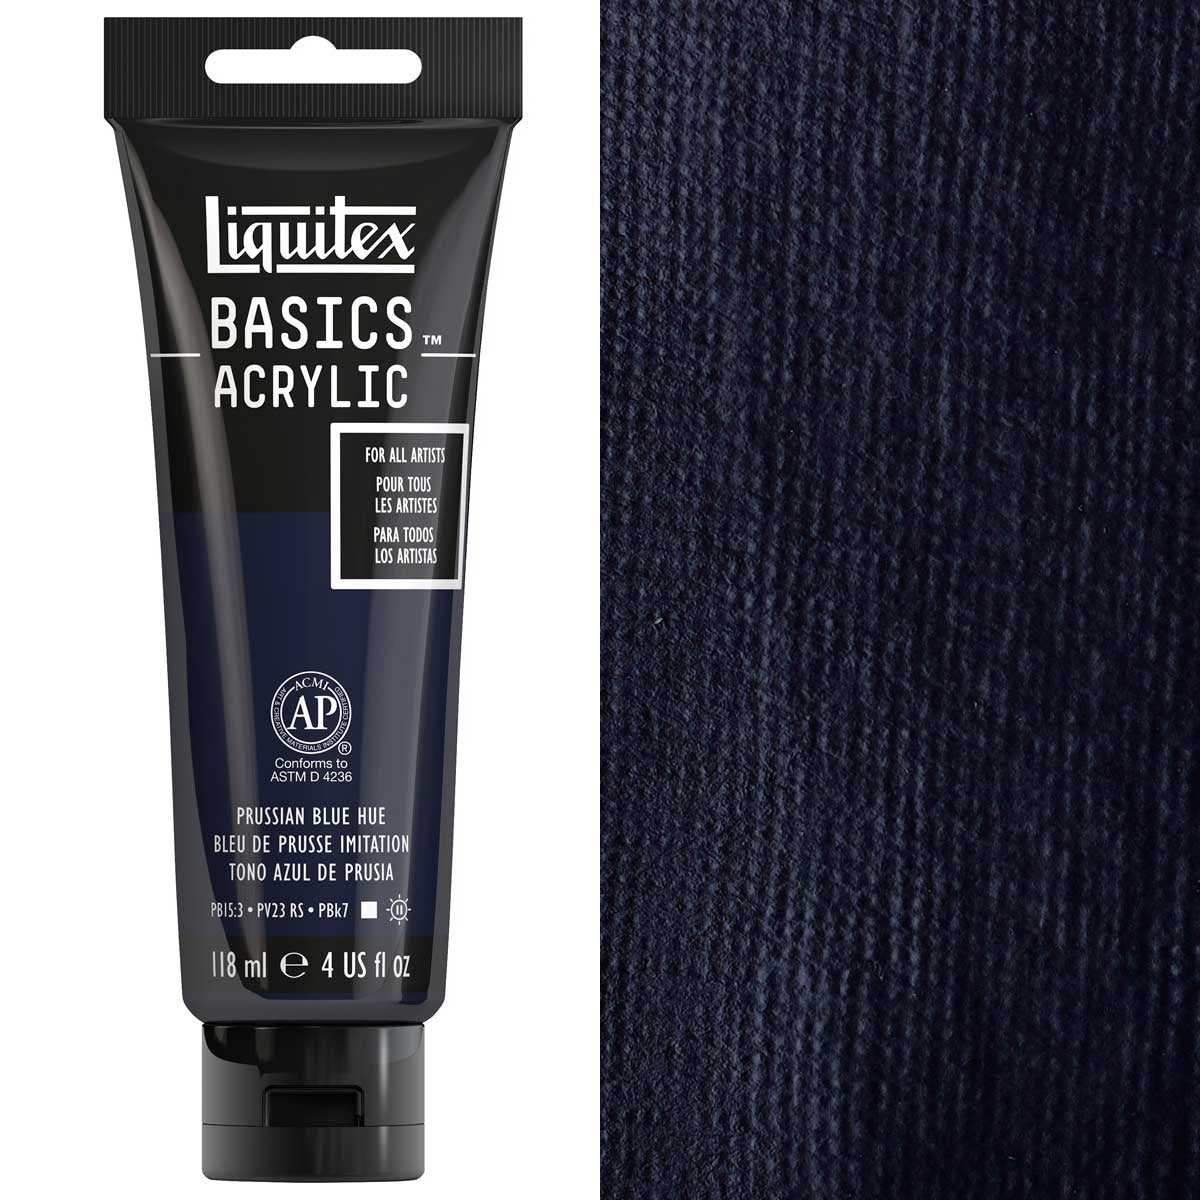 Liquitex - Basics Acrylic Colour - 118ml - Prussian Blue Hue